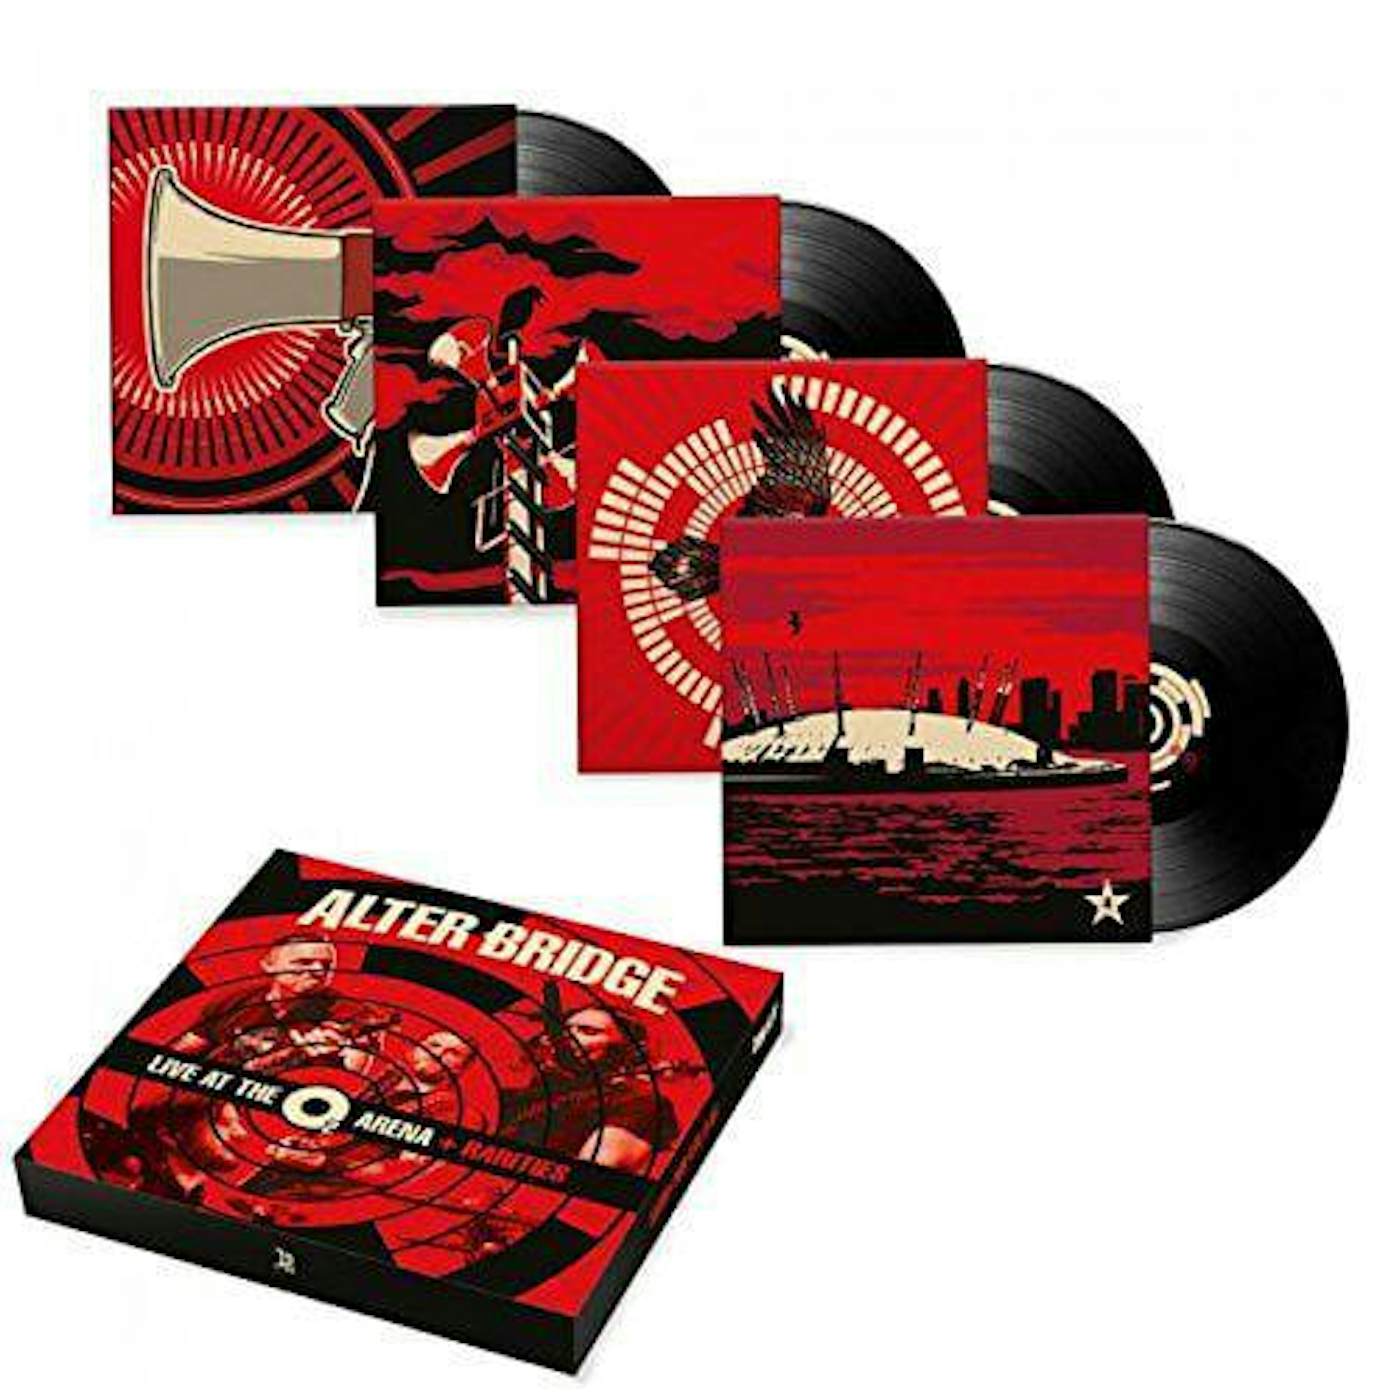 Alter Bridge Live At The O2 Arena + Rarities (4LP) Vinyl Record